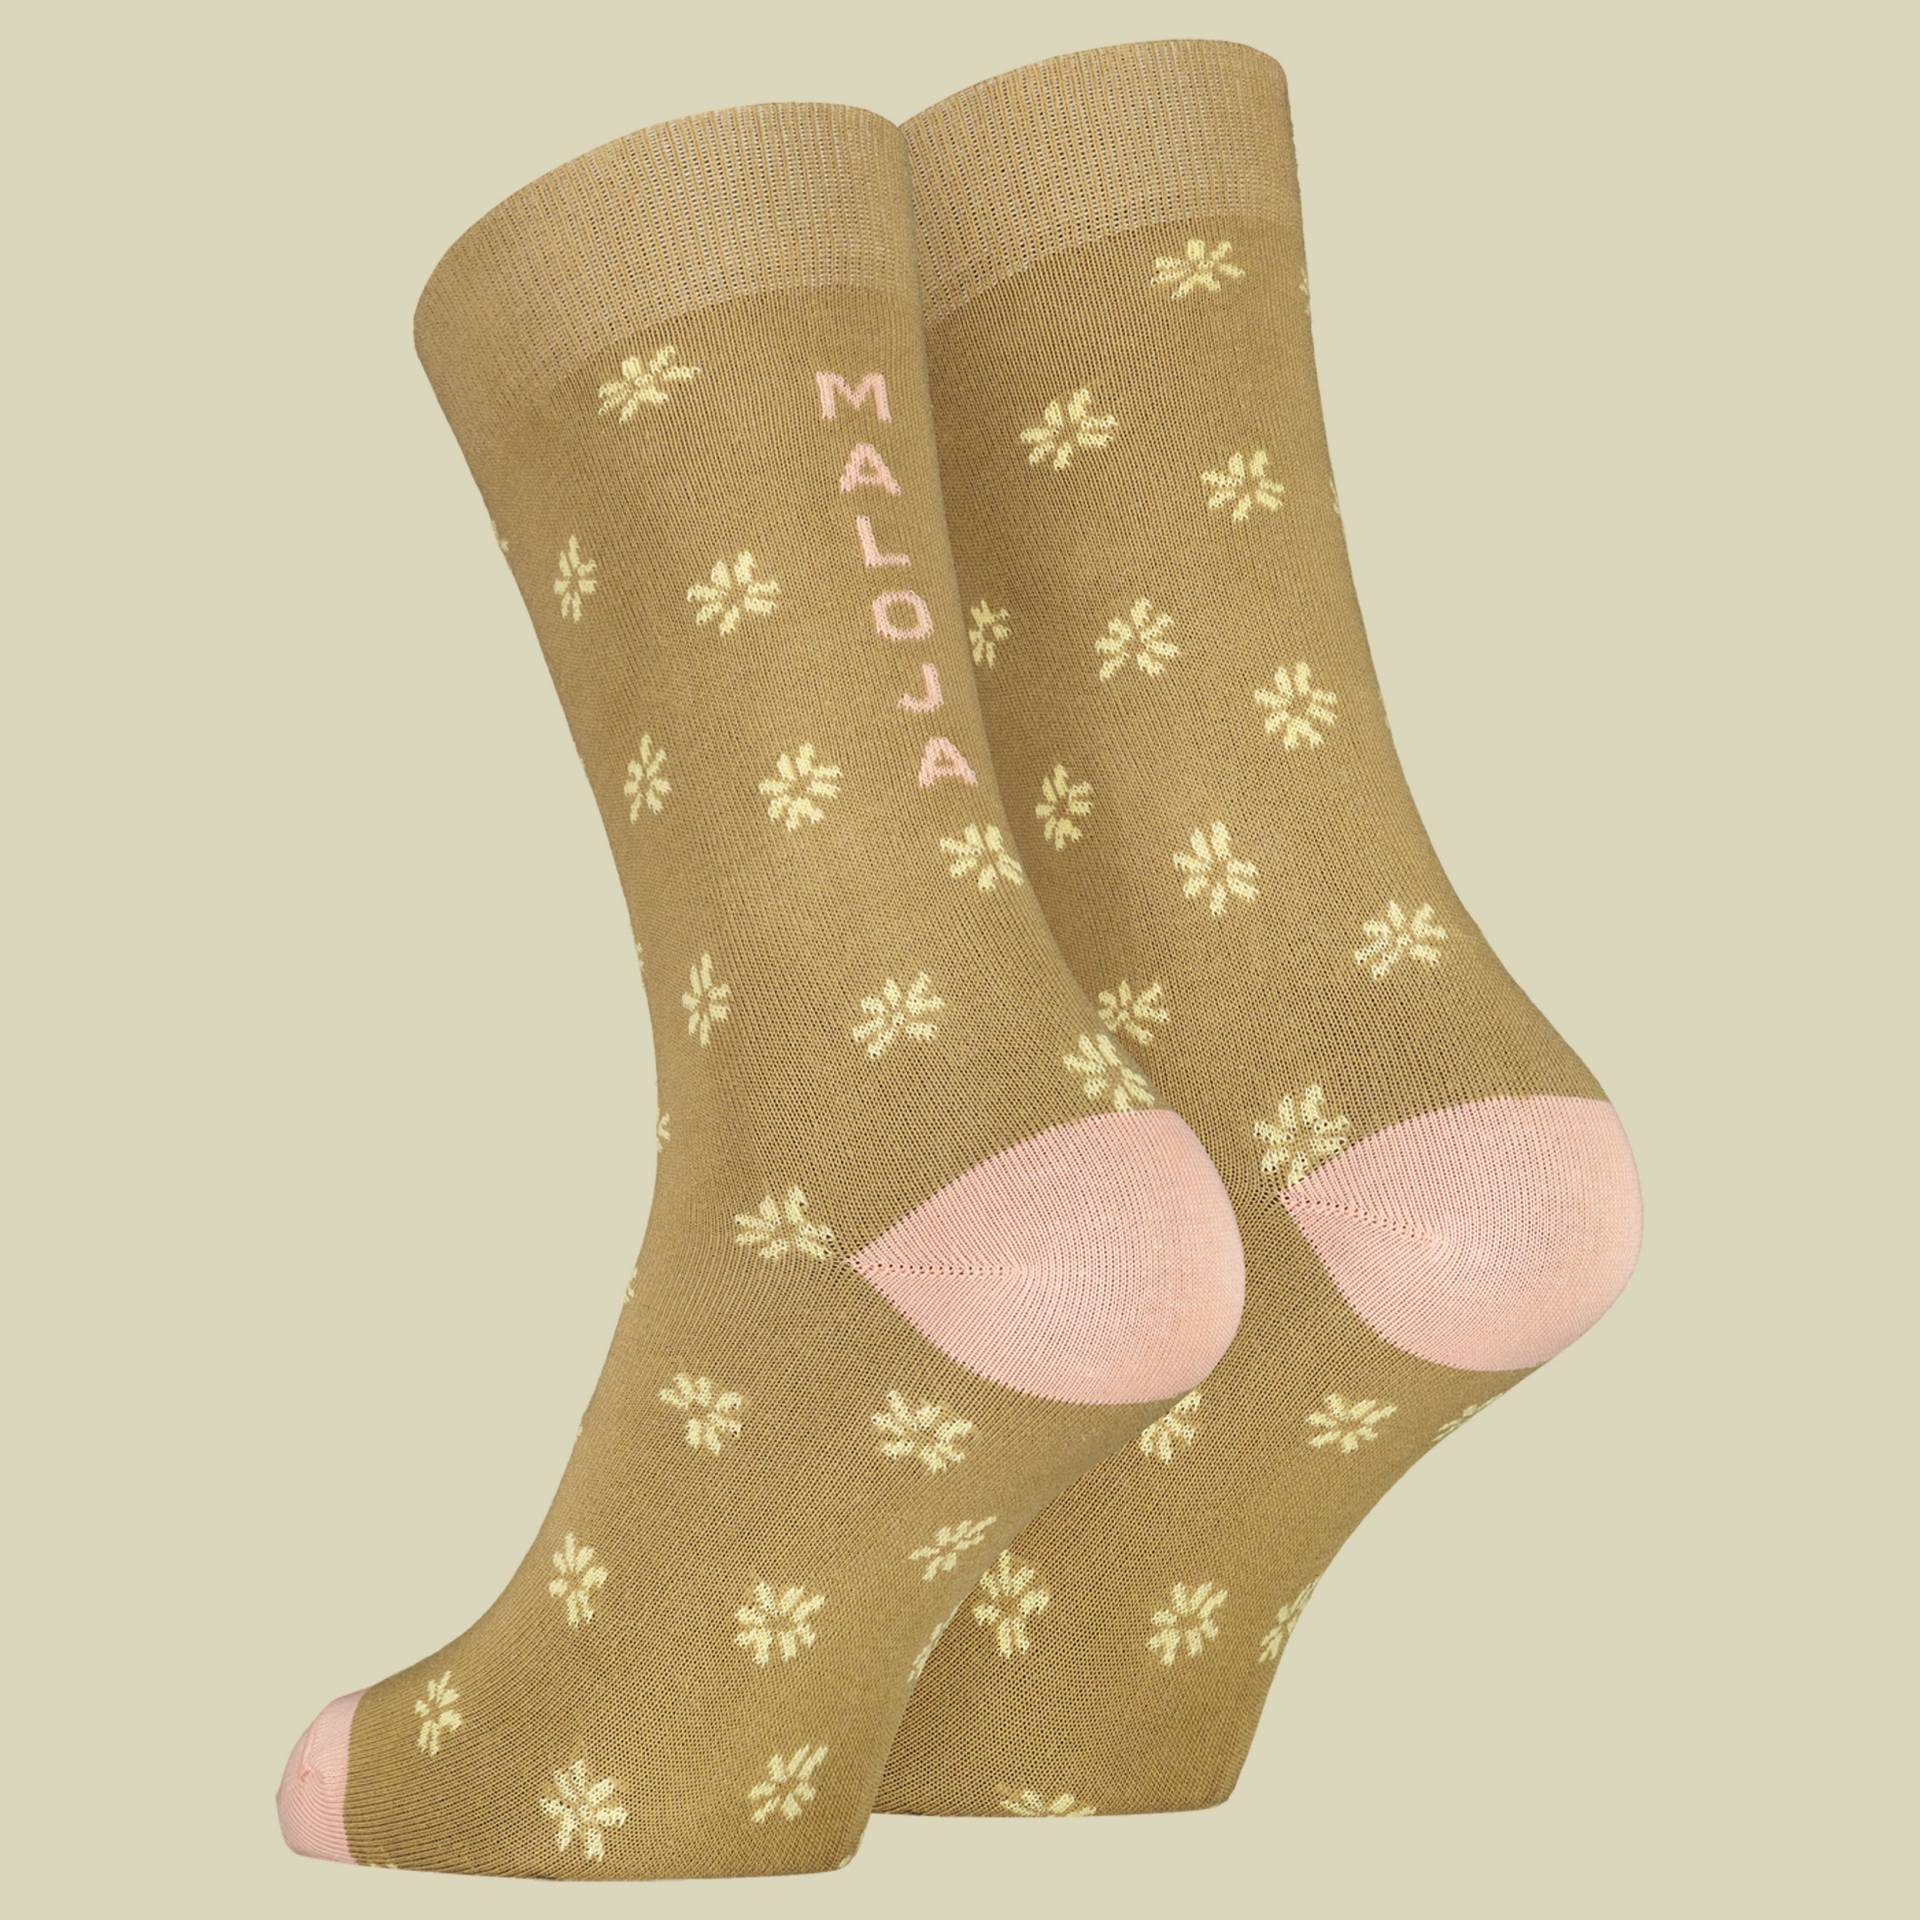 TanayM. Socks Women Größe 36-38 Farbe clay multi von Maloja